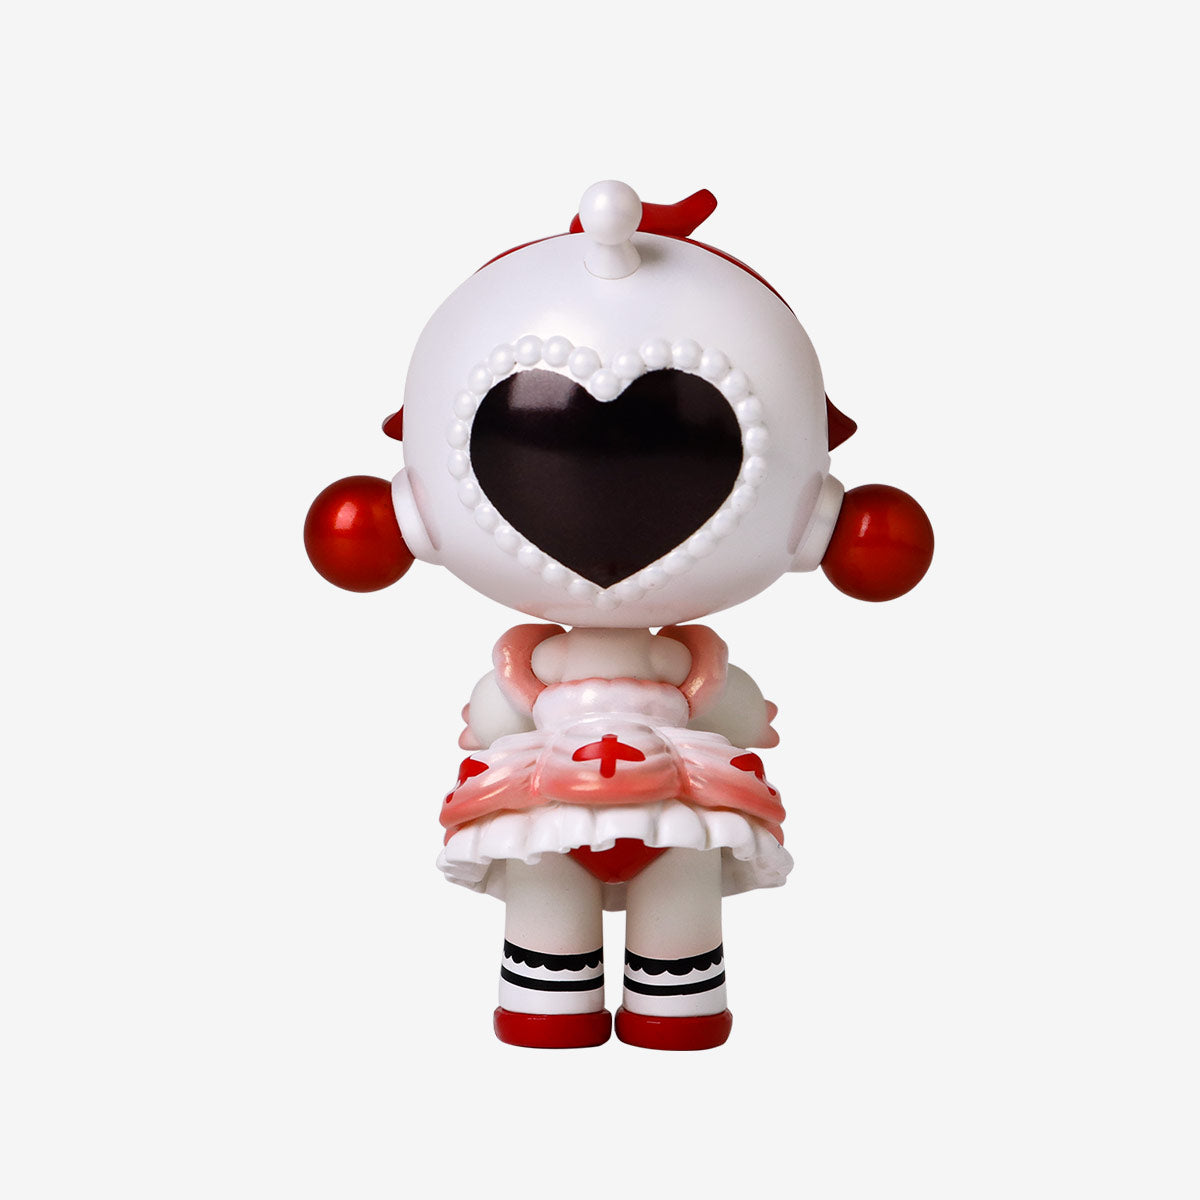 Pop Mart Limited Edition, Skullpanda, White Maid Figure